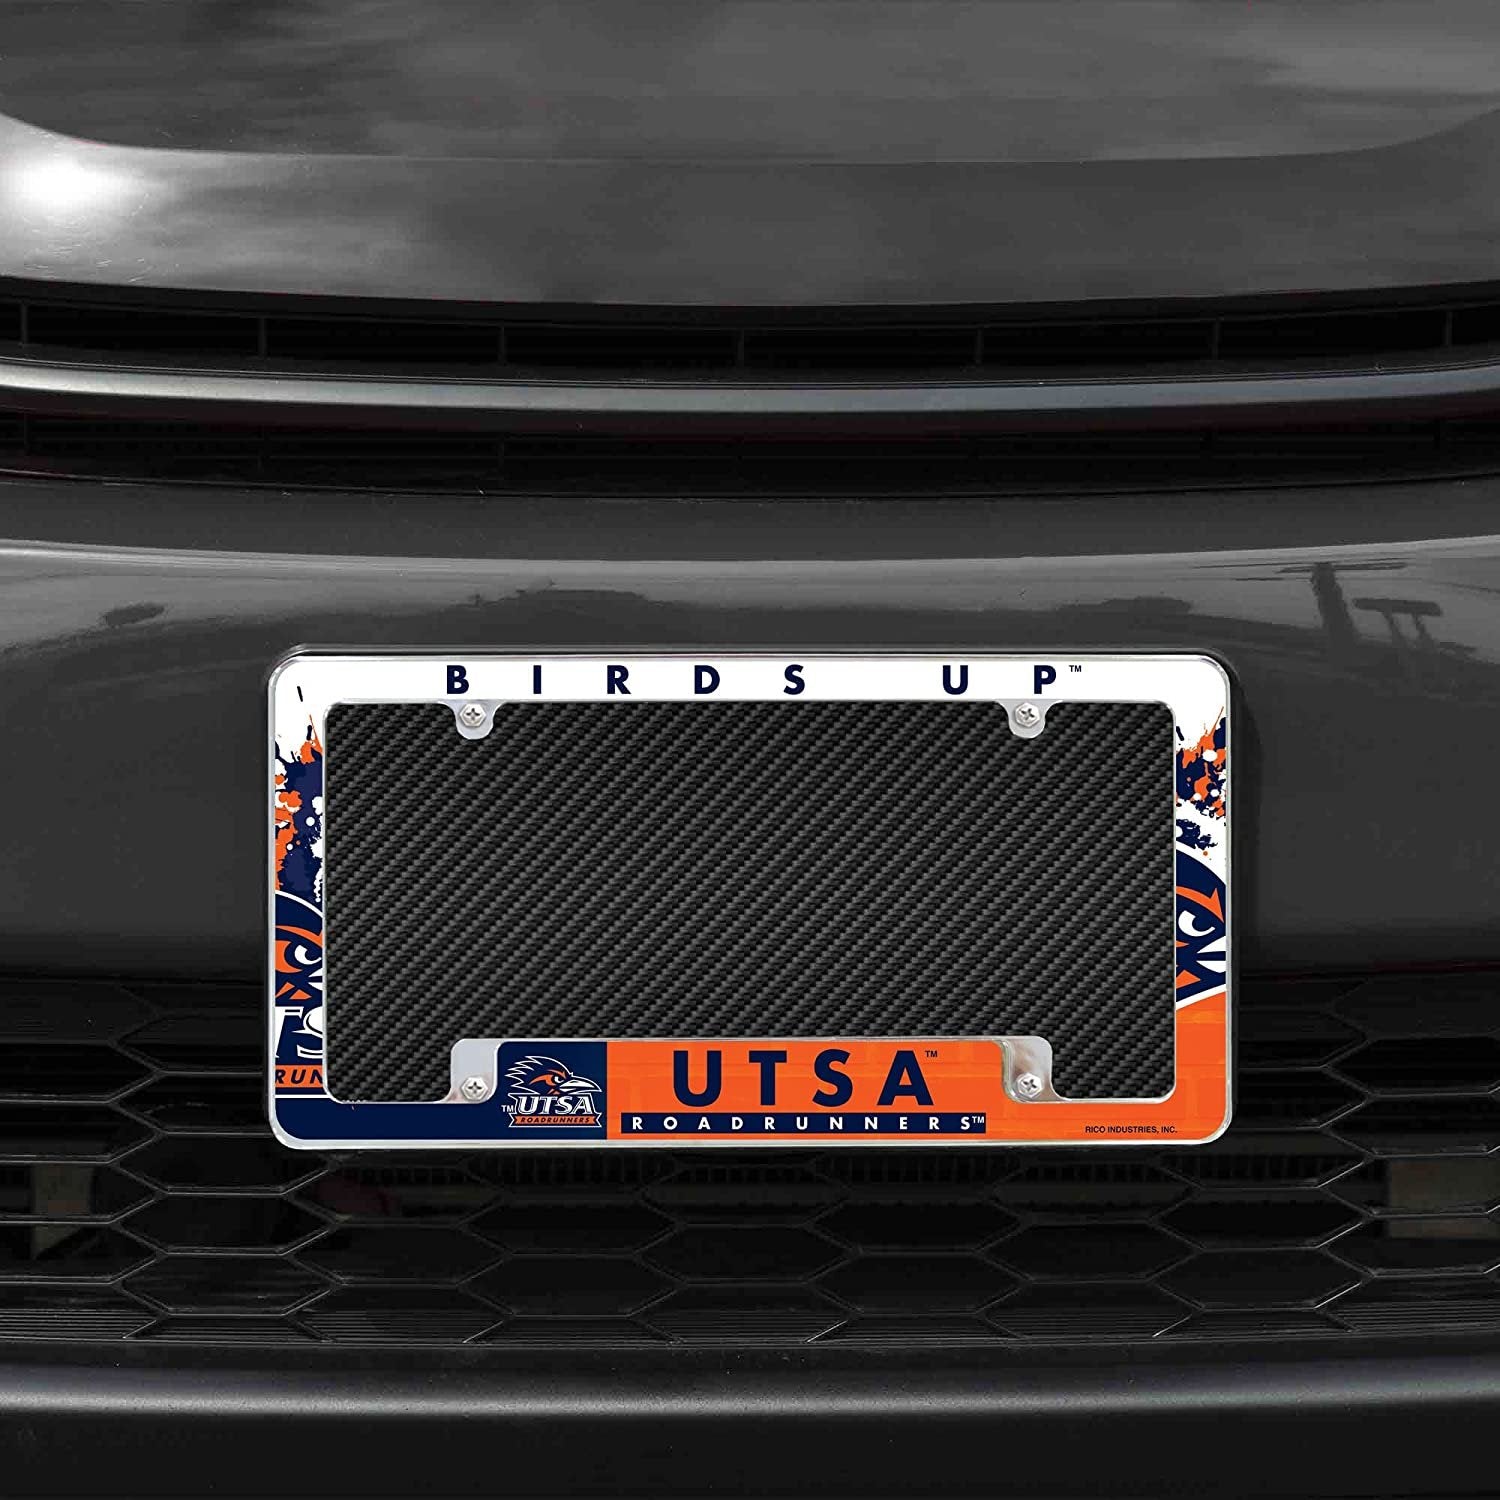 University of Texas San Antonio Roadrunners UTSA Metal License Plate Frame Chrome Tag Cover All Over Design 6x12 Inch